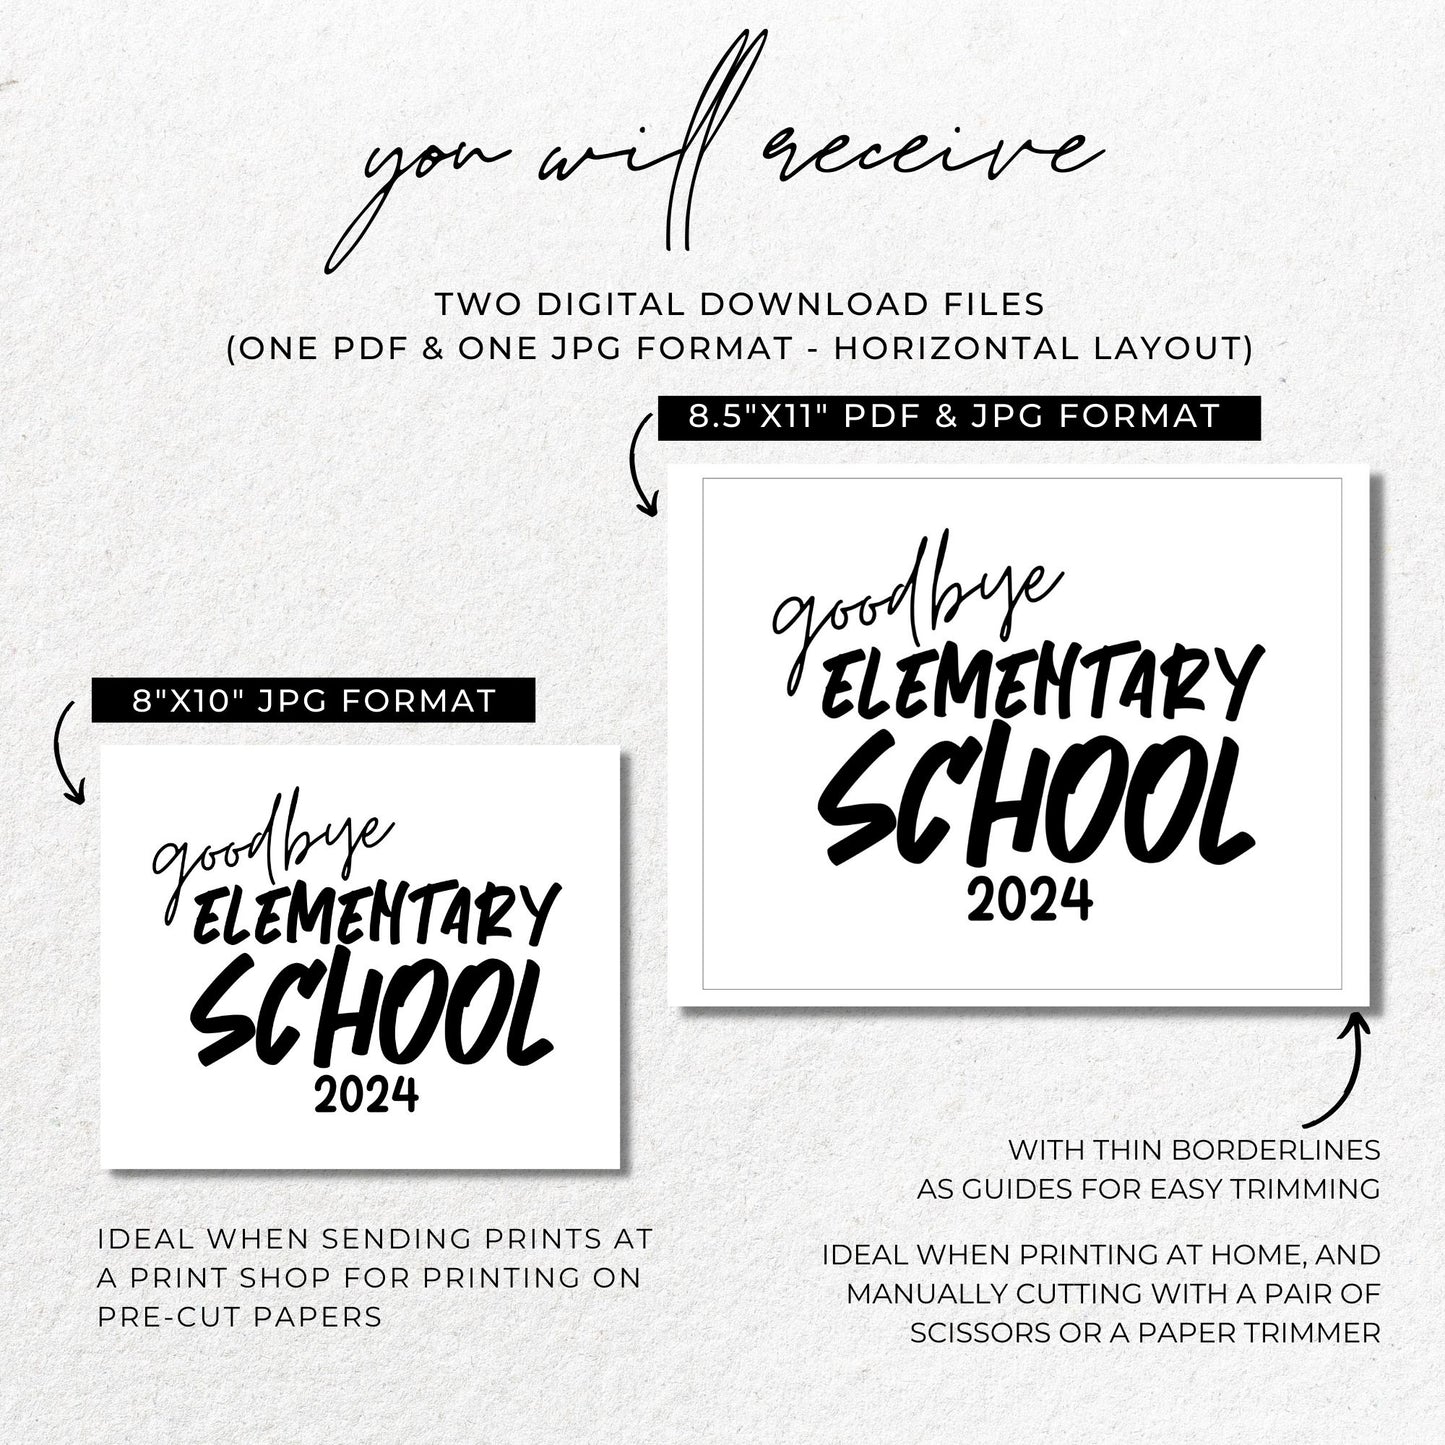 Goodbye Elementary School 2024 Sign Printable 8x10